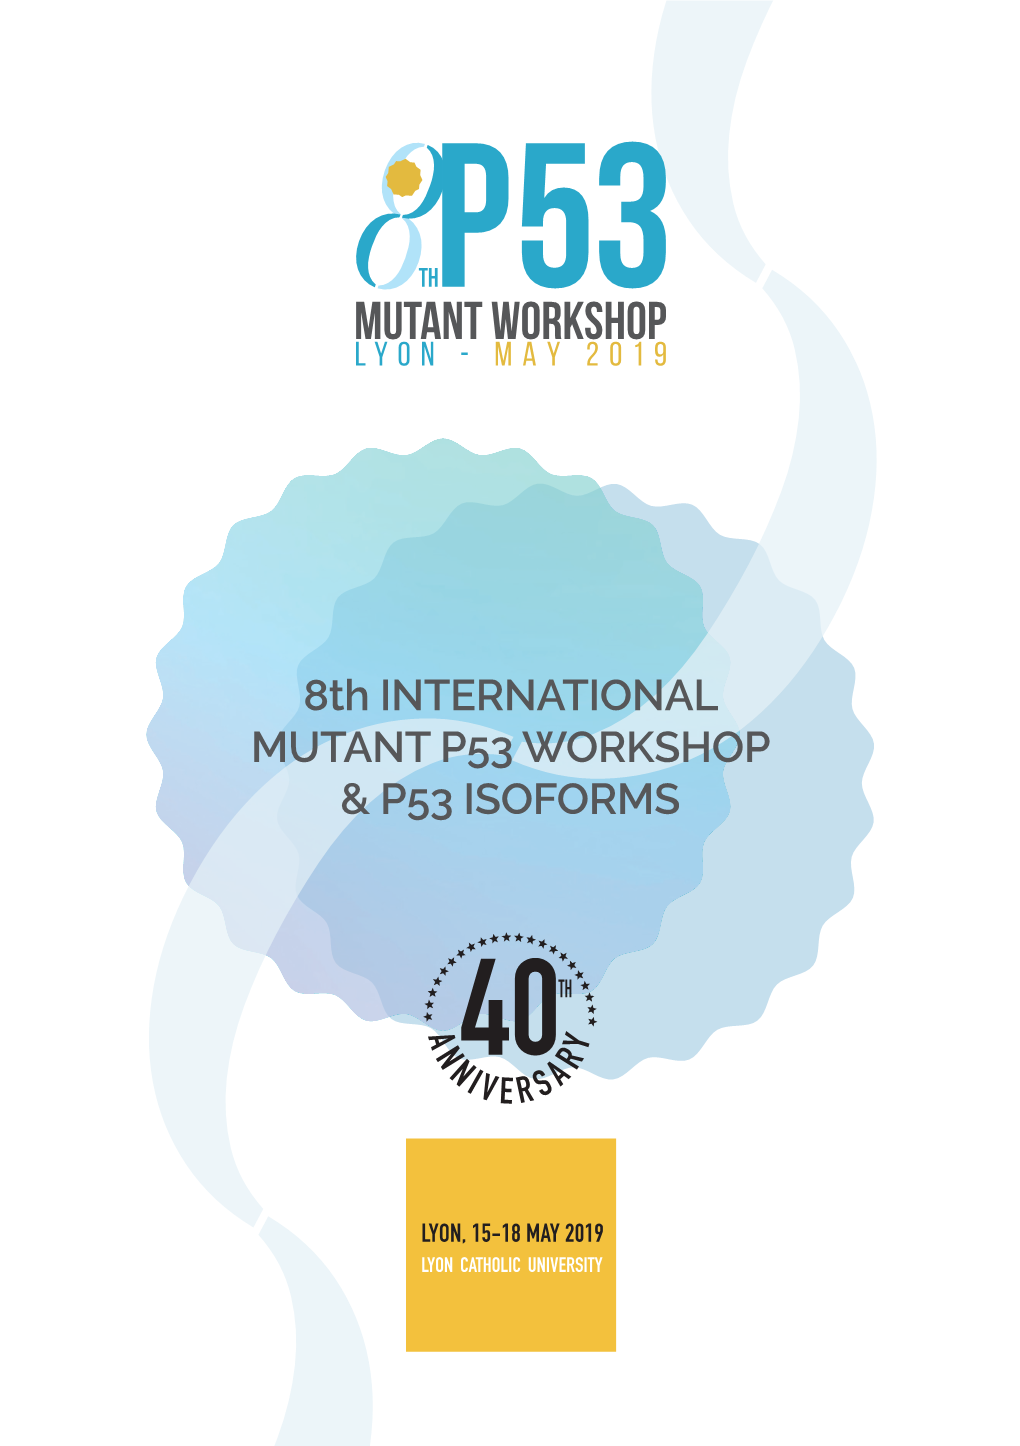 8Th INTERNATIONAL MUTANT P53 WORKSHOP & P53 ISOFORMS